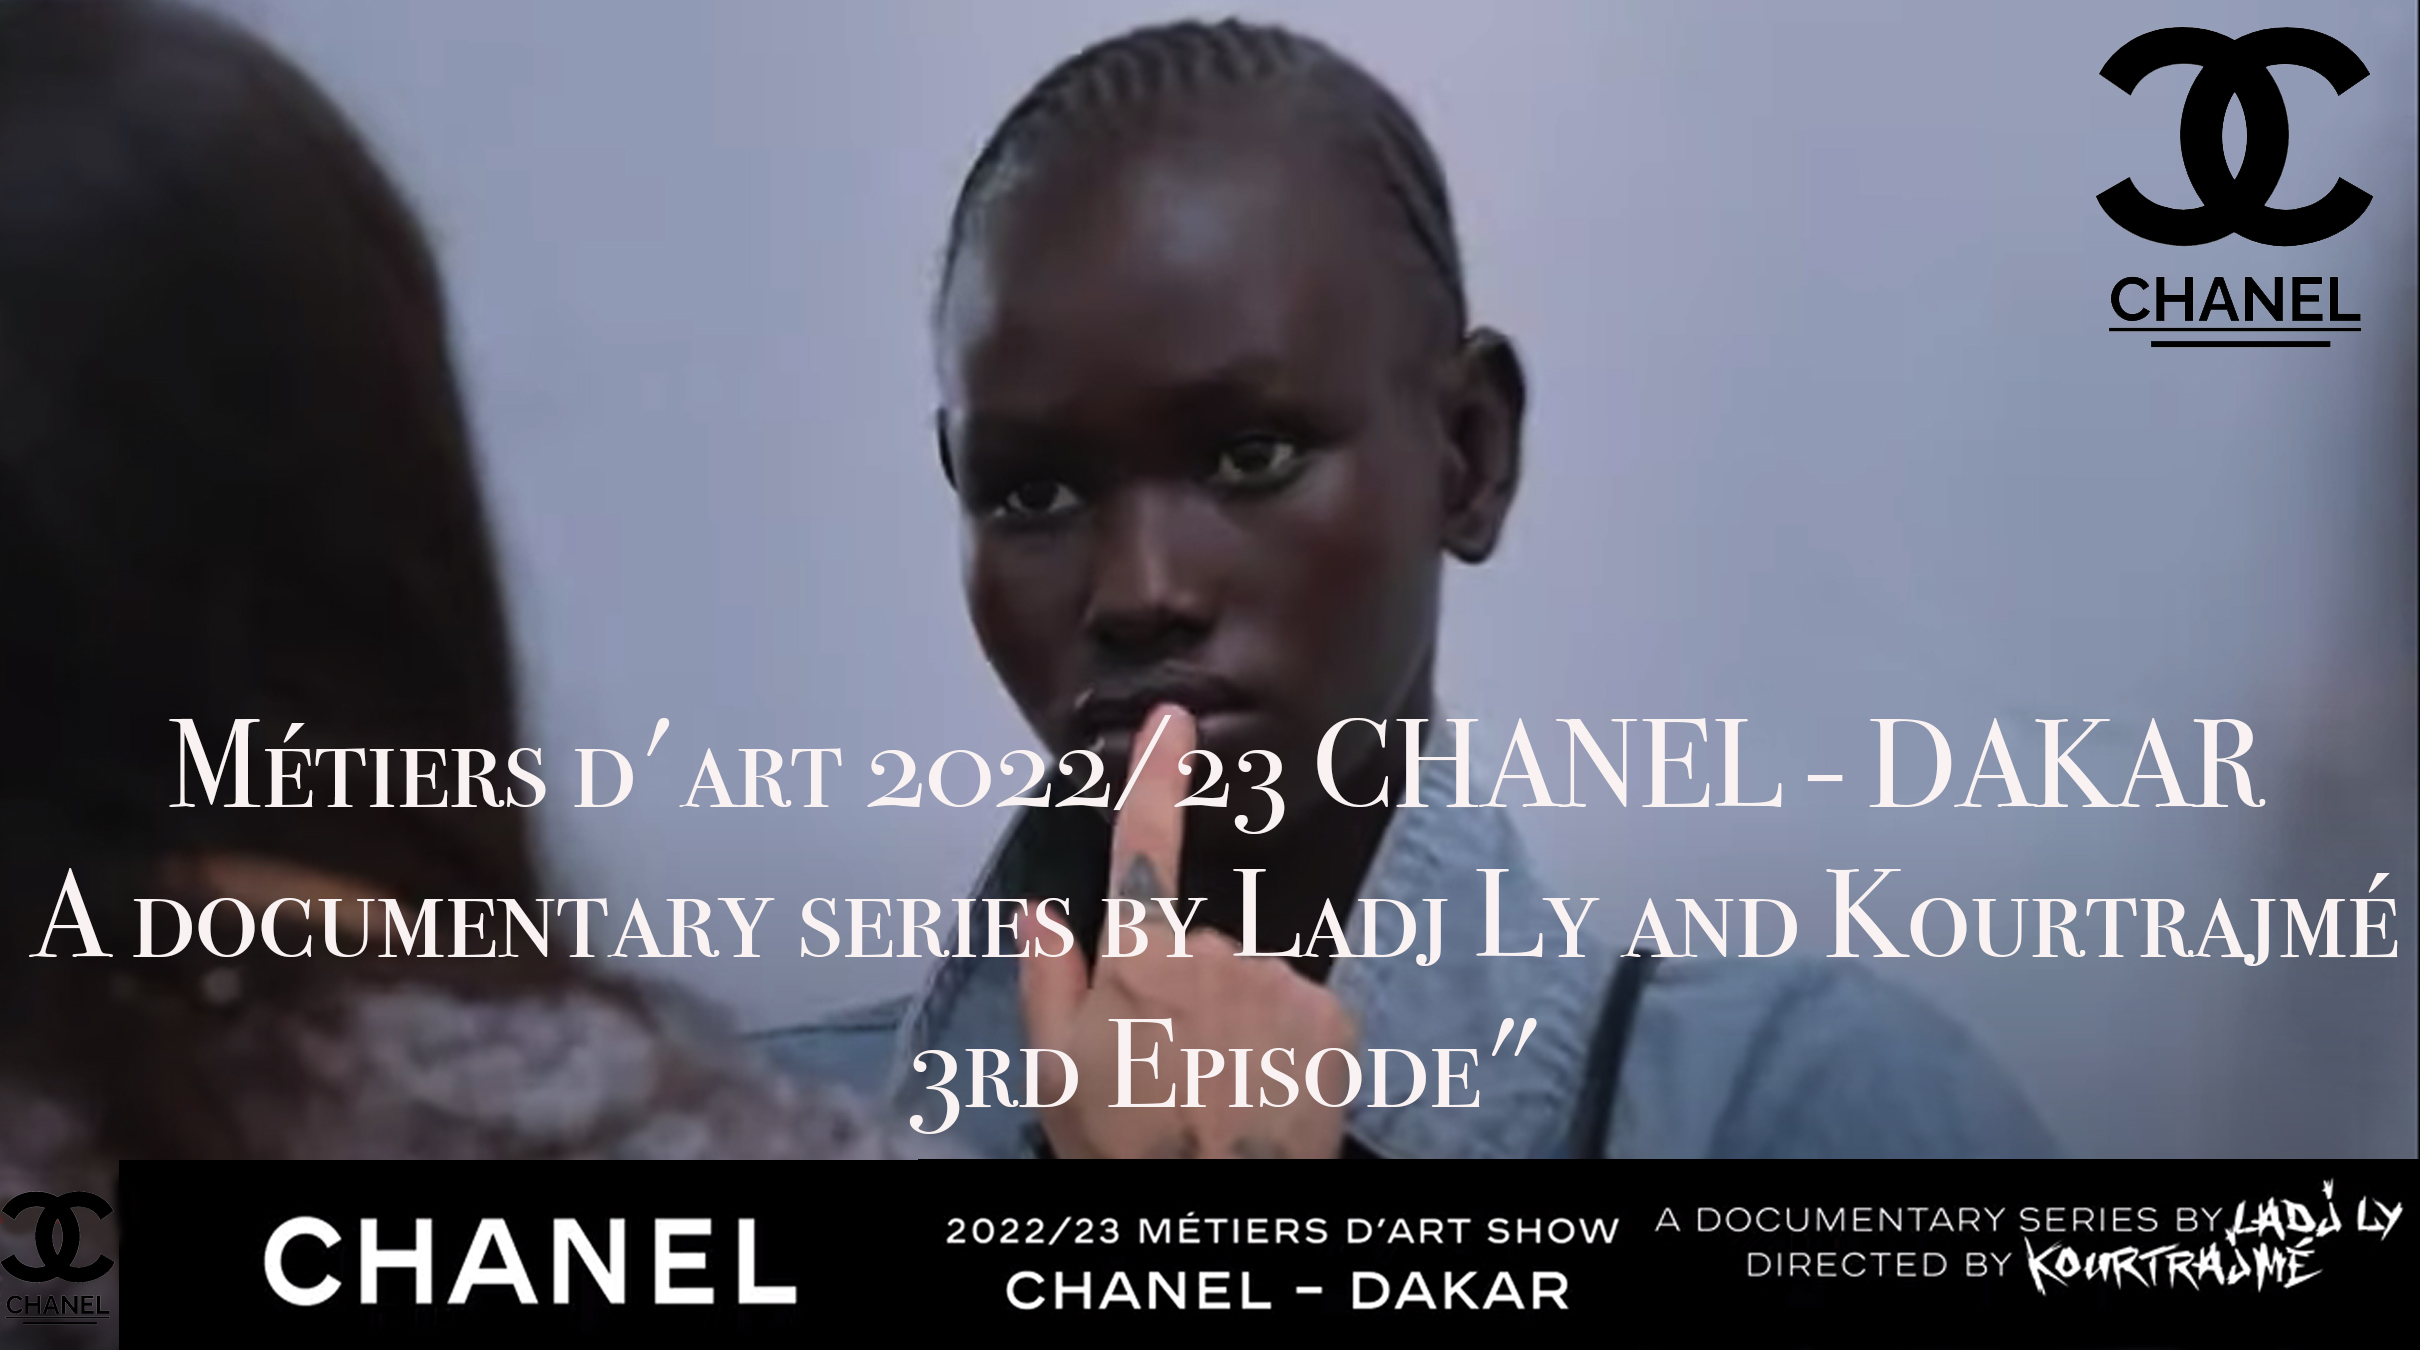 BEST-AFRICAN-FASHION-MAGAZINE-Métiers-d'art-2022-23-CHANEL-DAKAR-A-documentary-series-by-Ladj-Ly-and-Kourtrajmé-3rd-Episode-DN-AFRICA-DNA-INTERNATIONAL-MEDIA-PARTNER